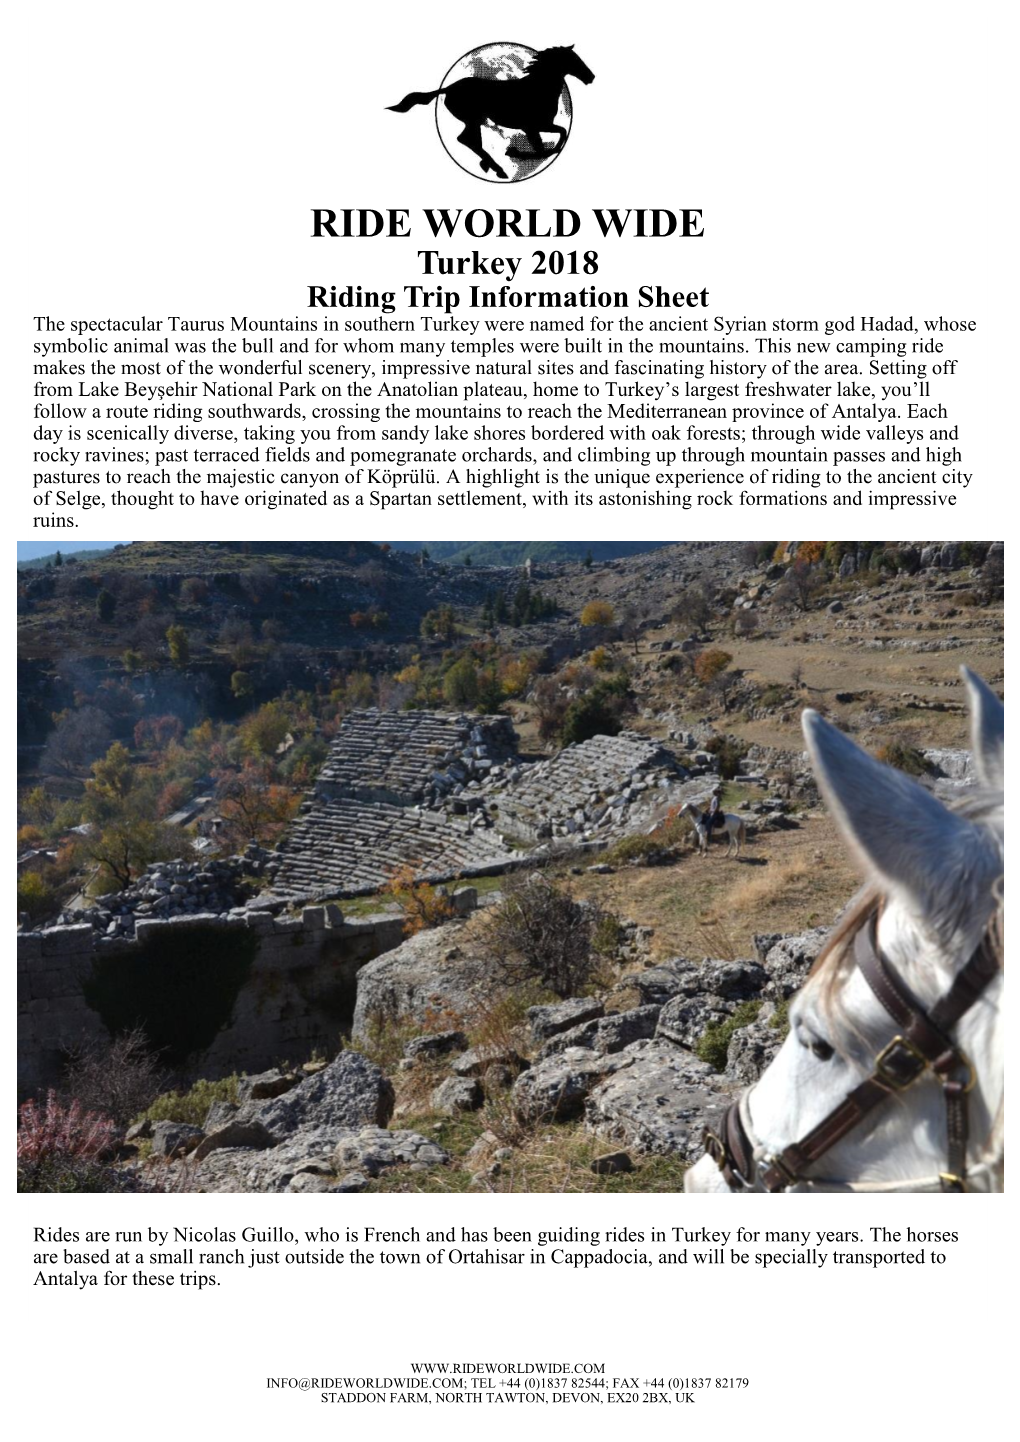 RIDE WORLD WIDE Turkey 2018 Riding Trip Information Sheet